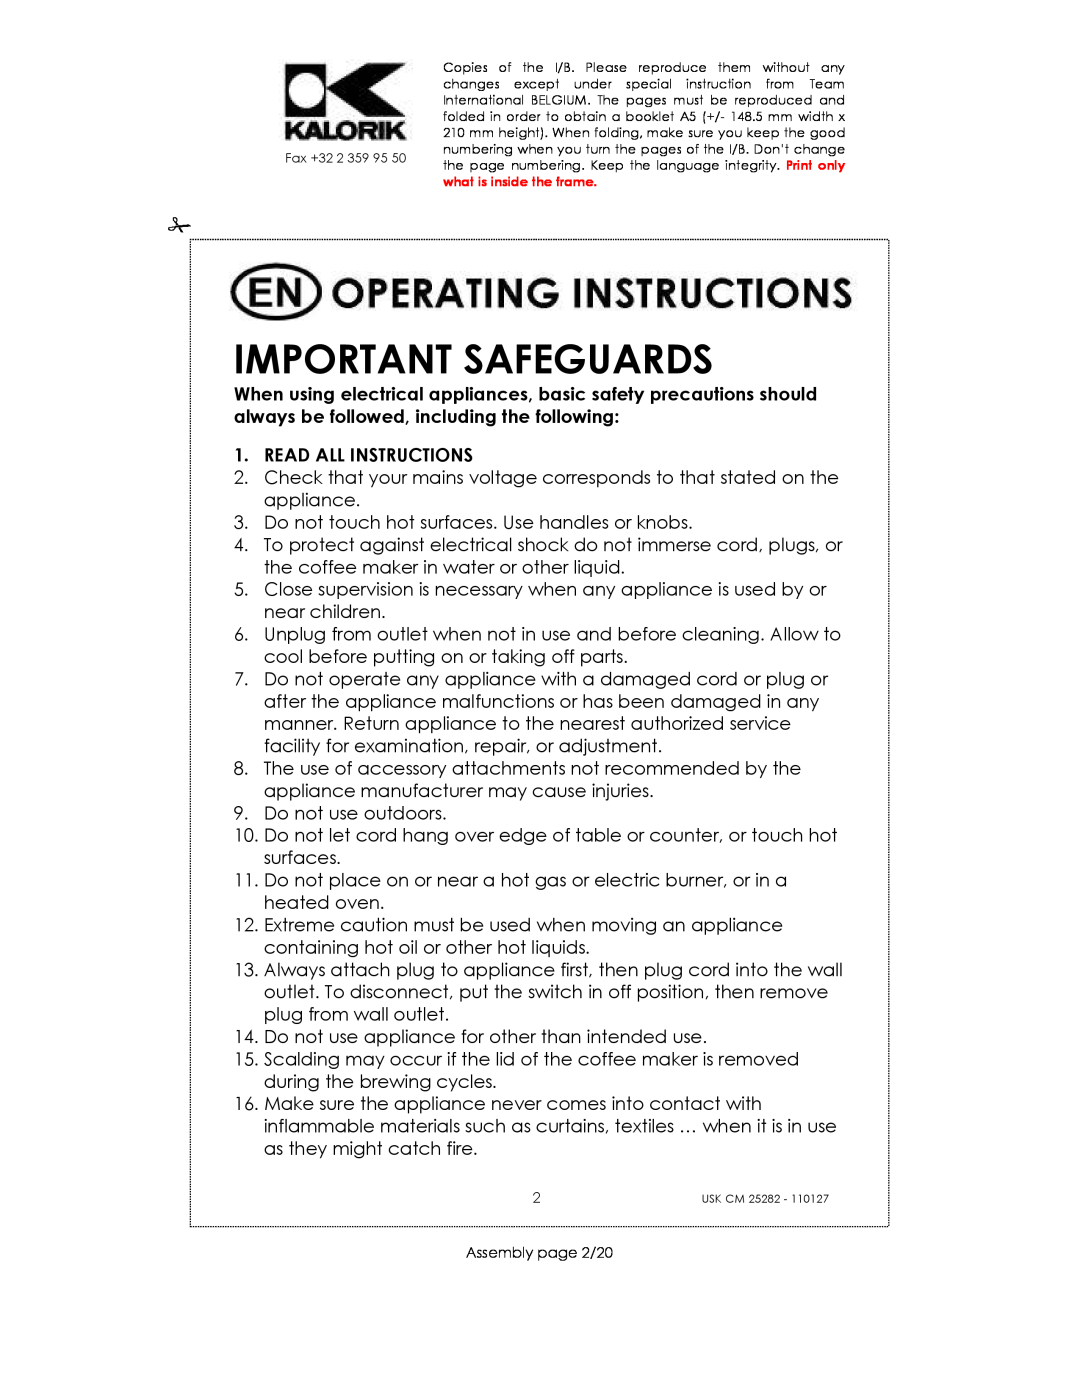 Kalorik USK CM 25282 manual Important Safeguards, Read All Instructions 